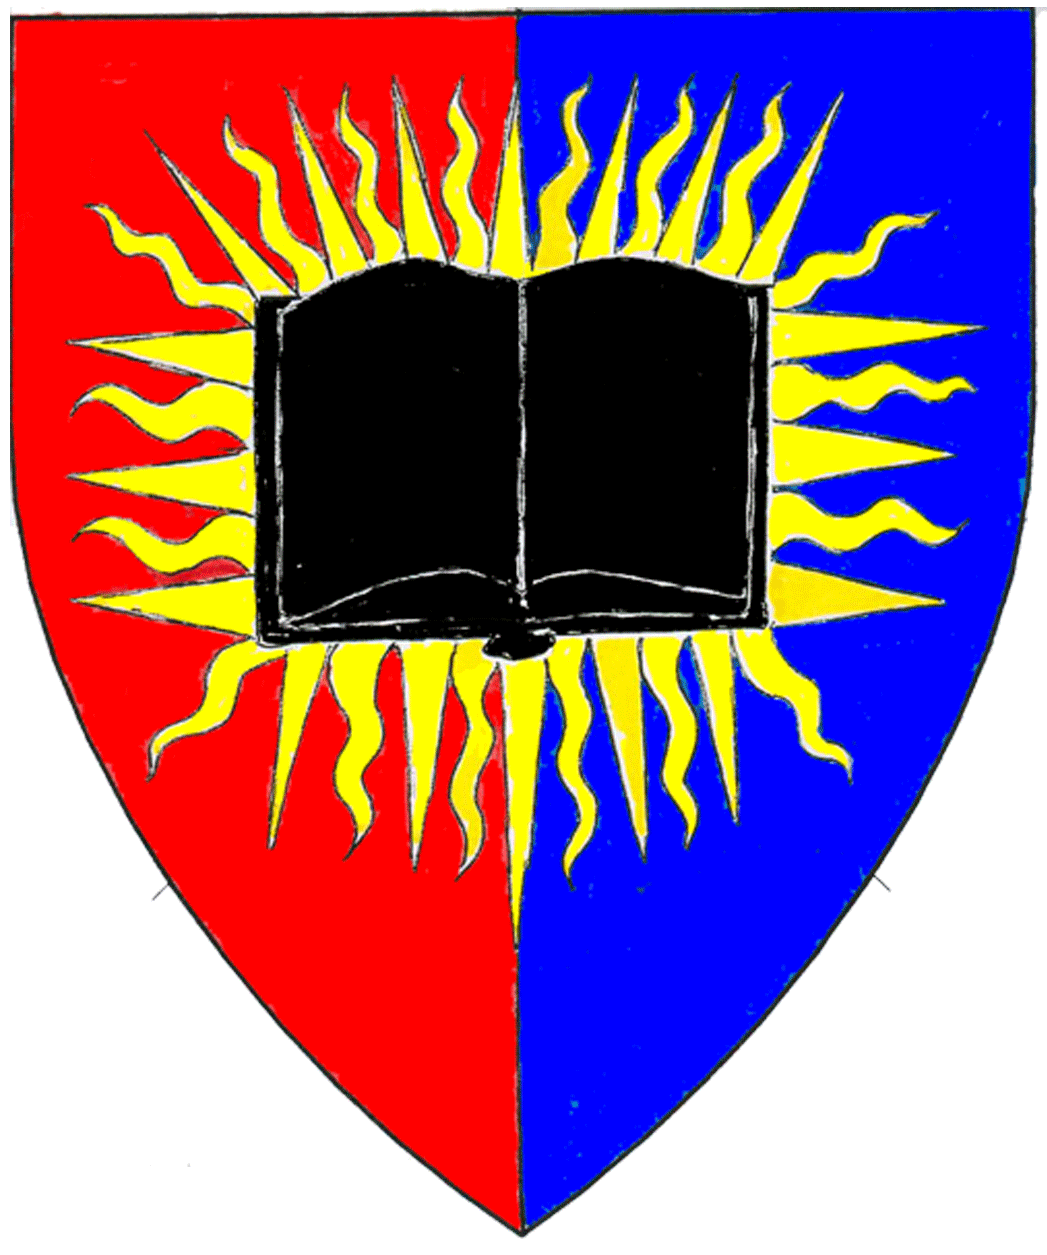 The arms of Engelhardt Bauernfeind